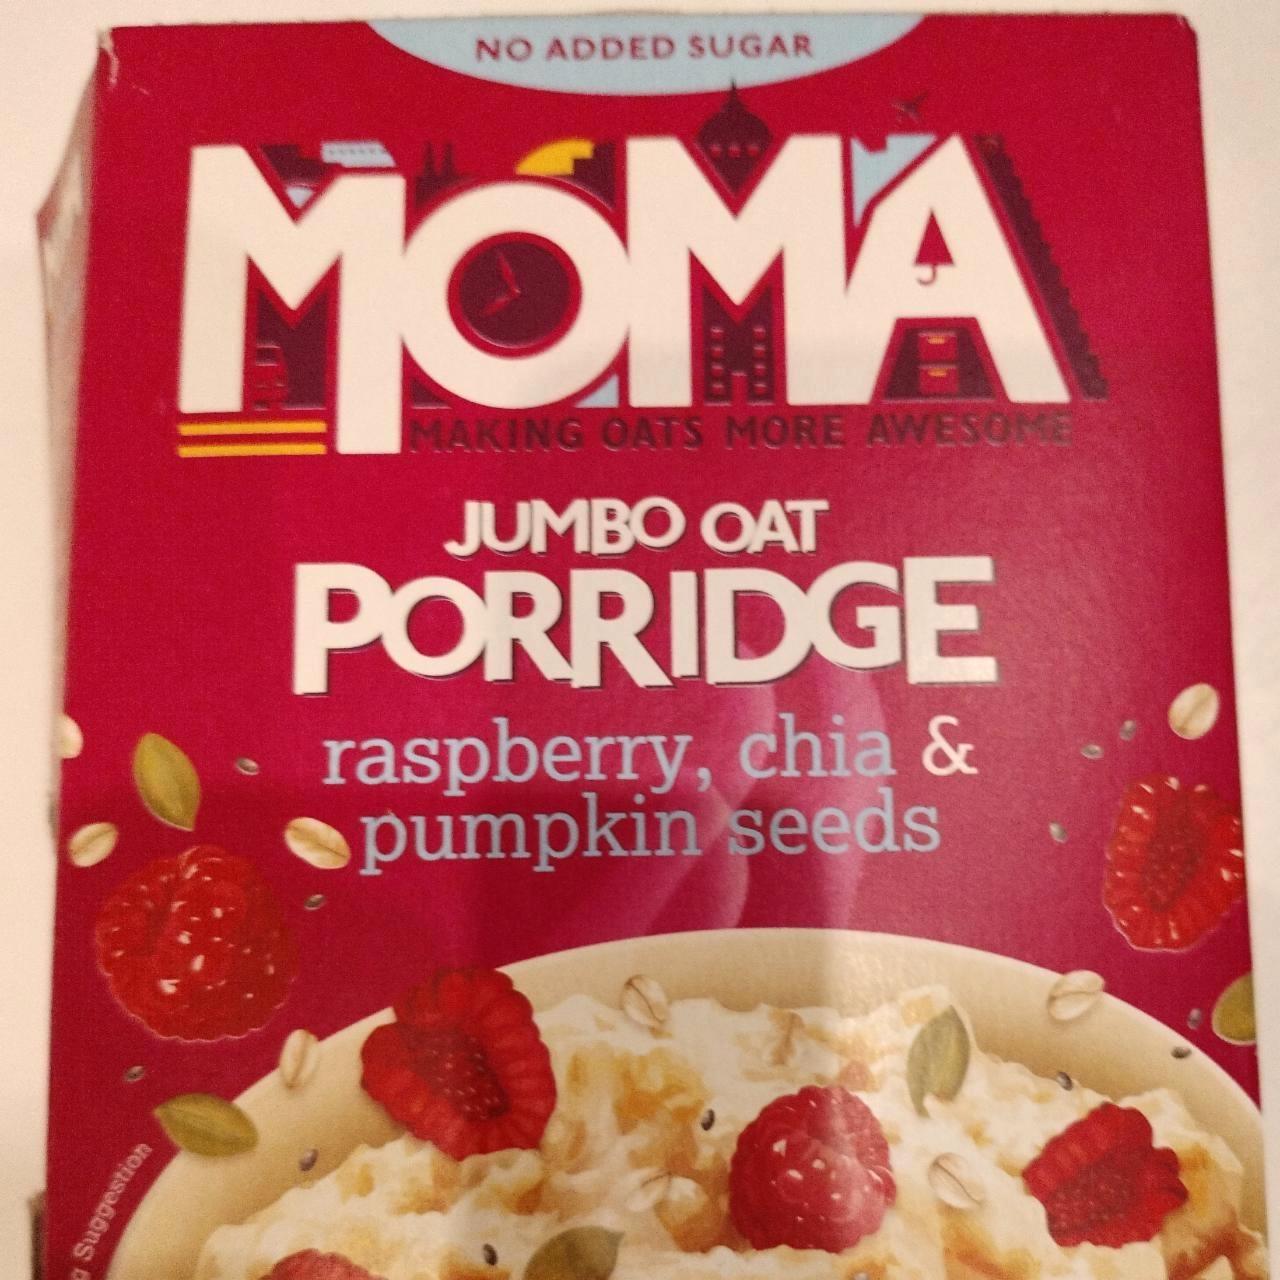 Képek - Jumbo oat porridge Raspberry, chia & pumpkin seeds Moma